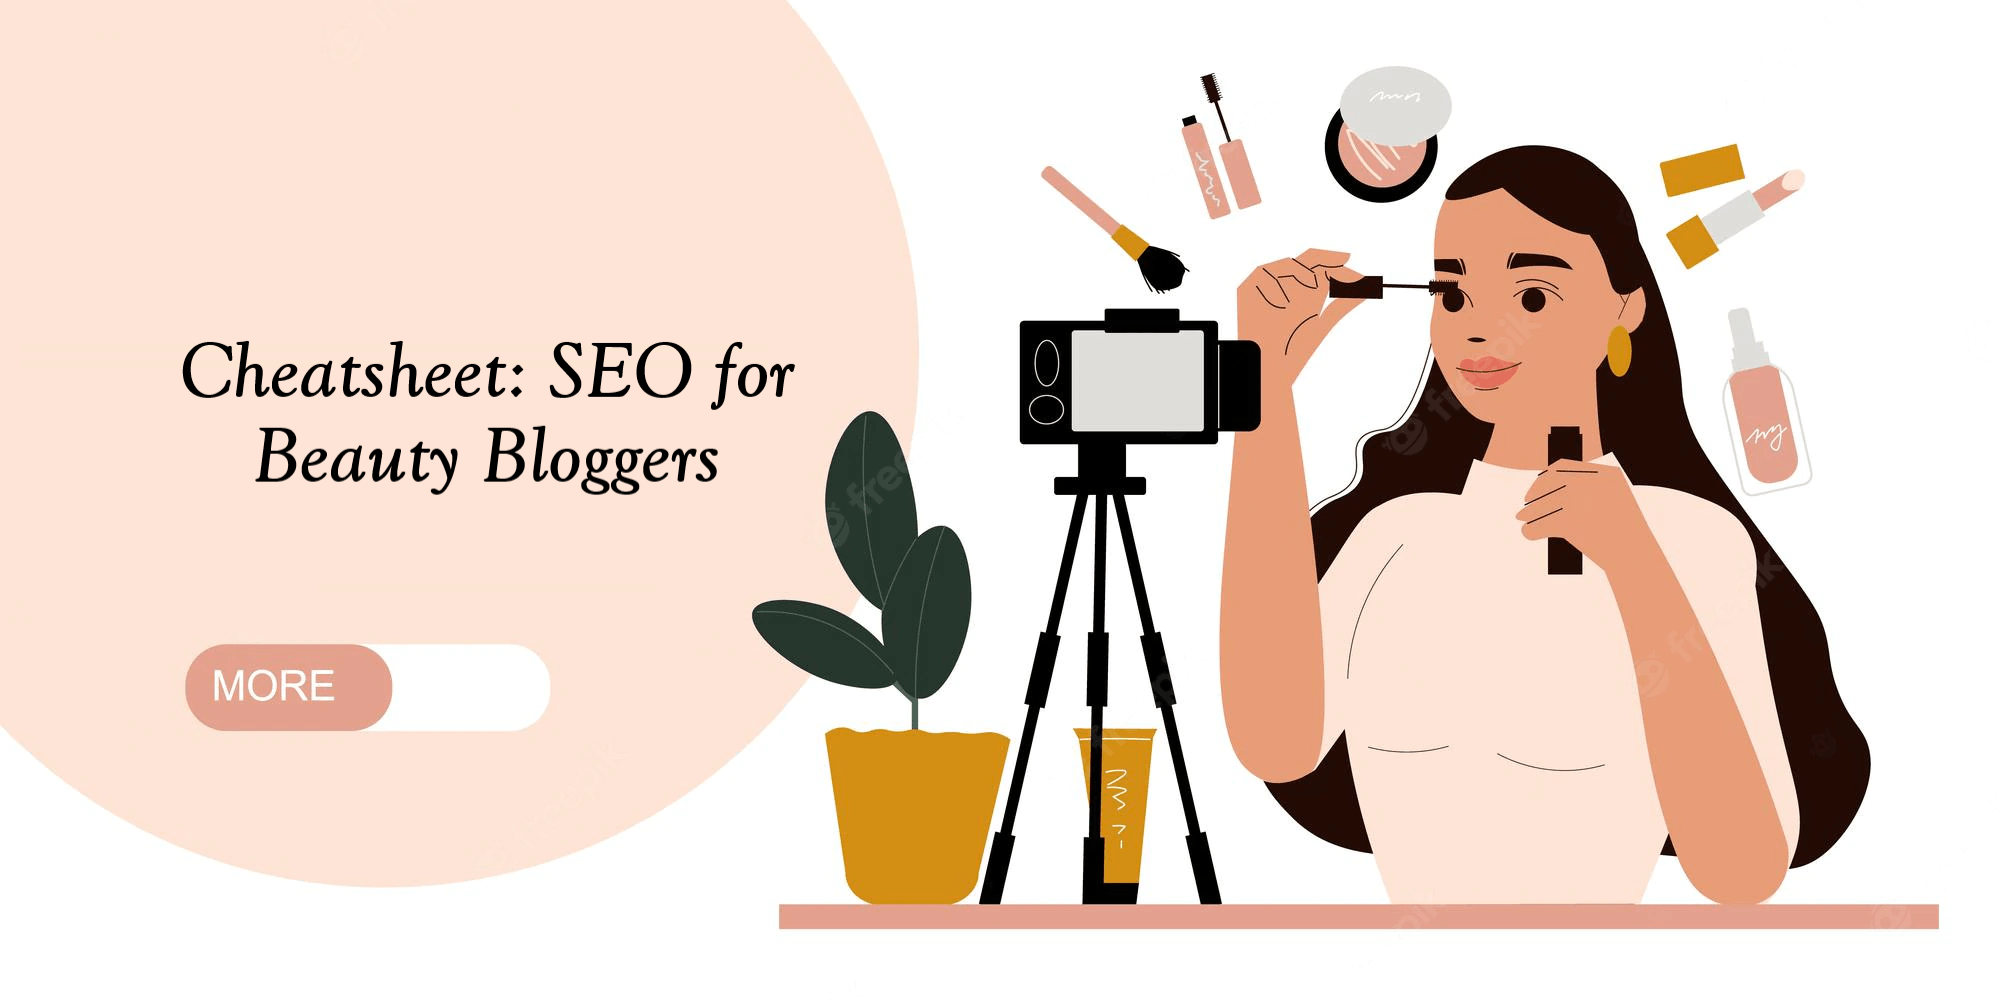 Cheatsheet: SEO for Beauty Bloggers